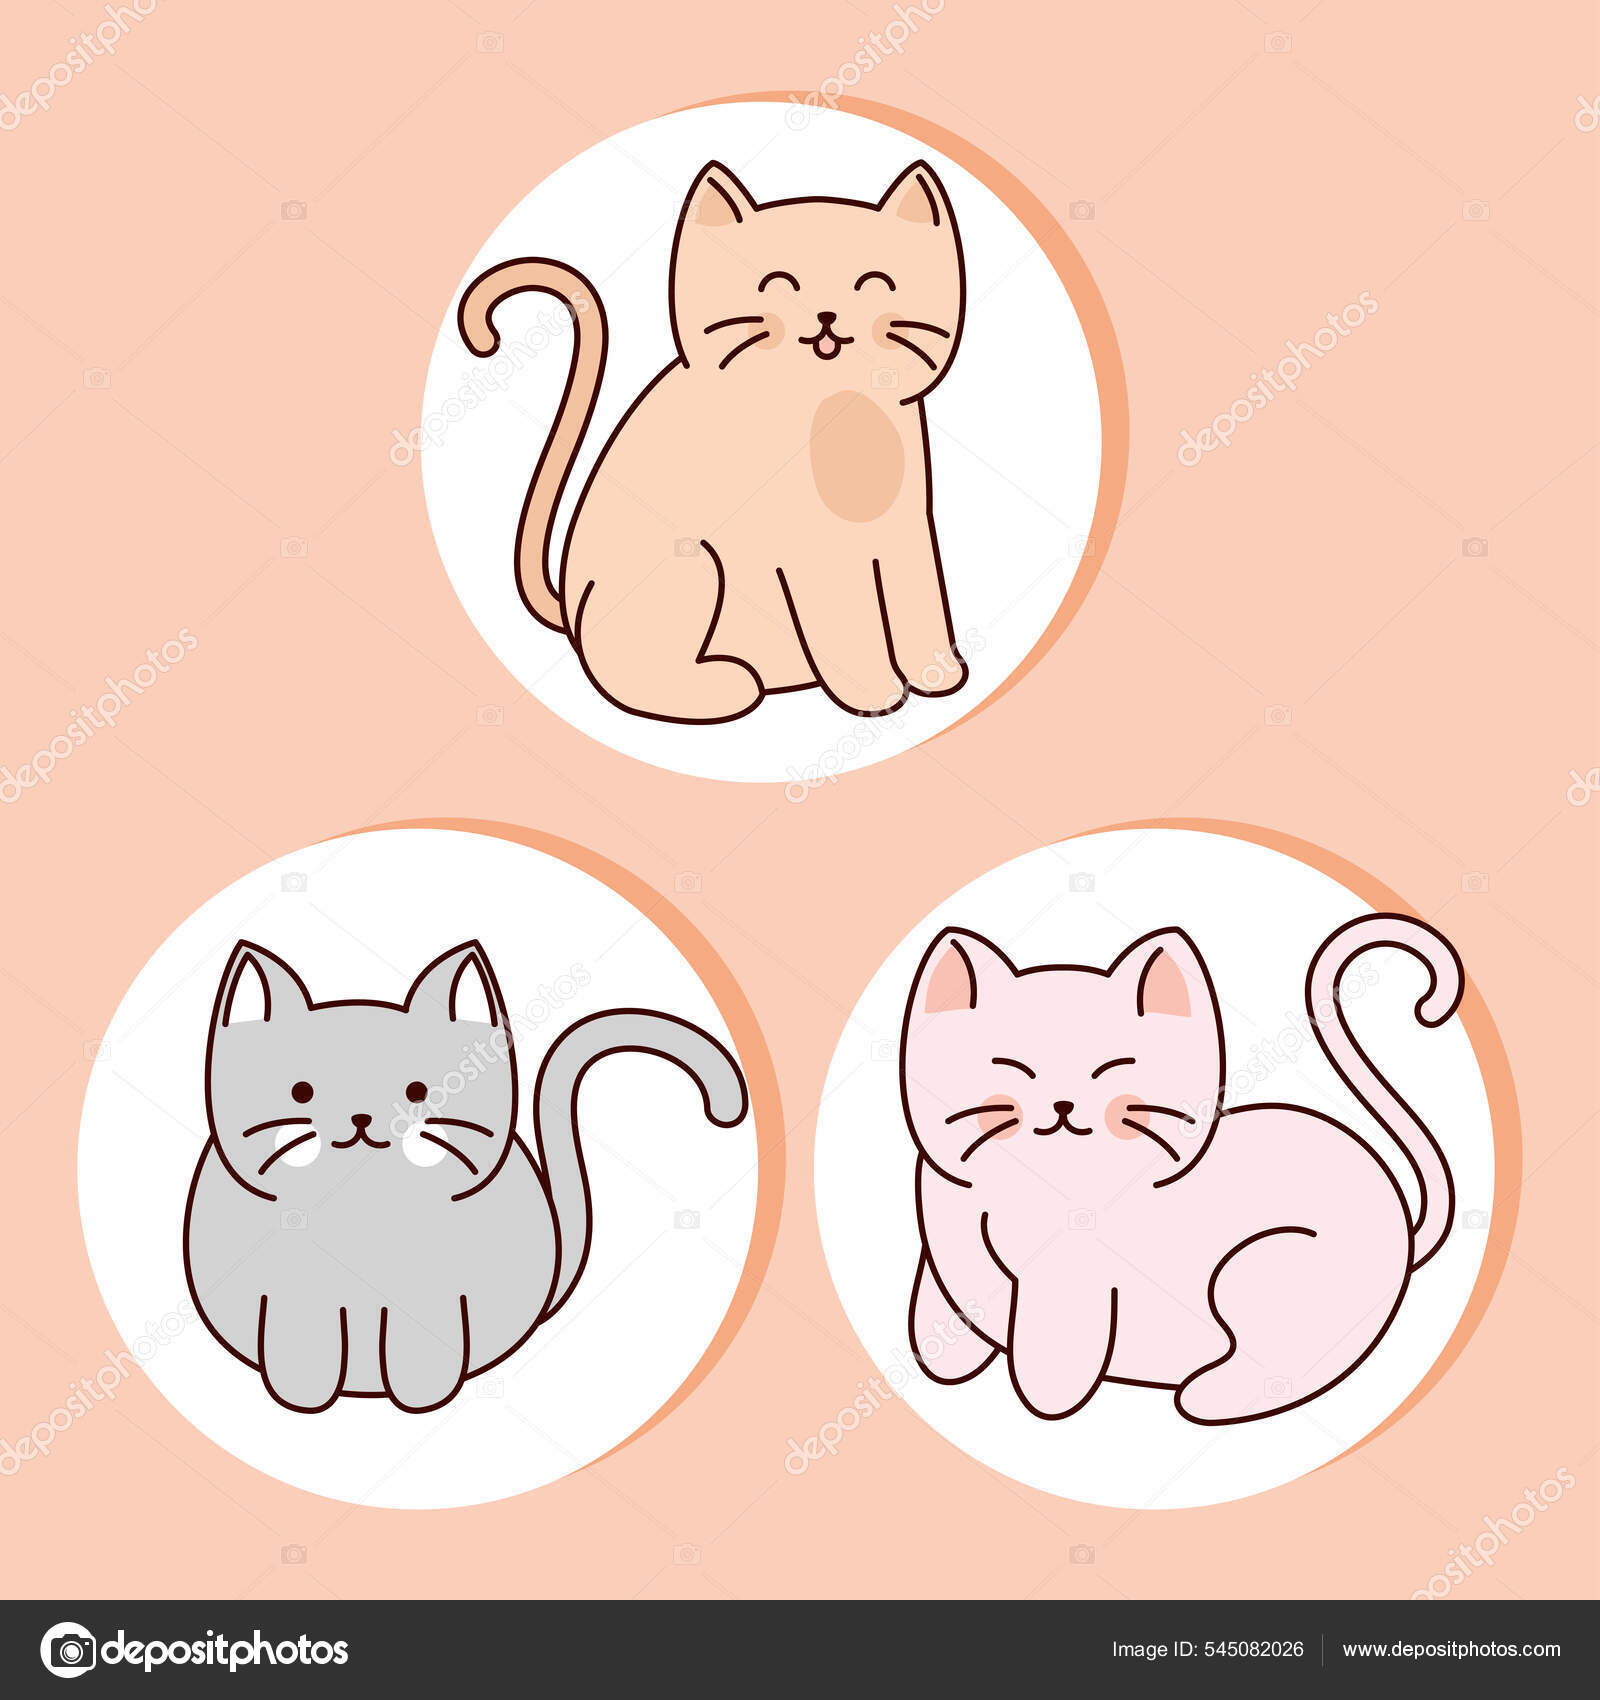 cute cats icon set, Stock vector